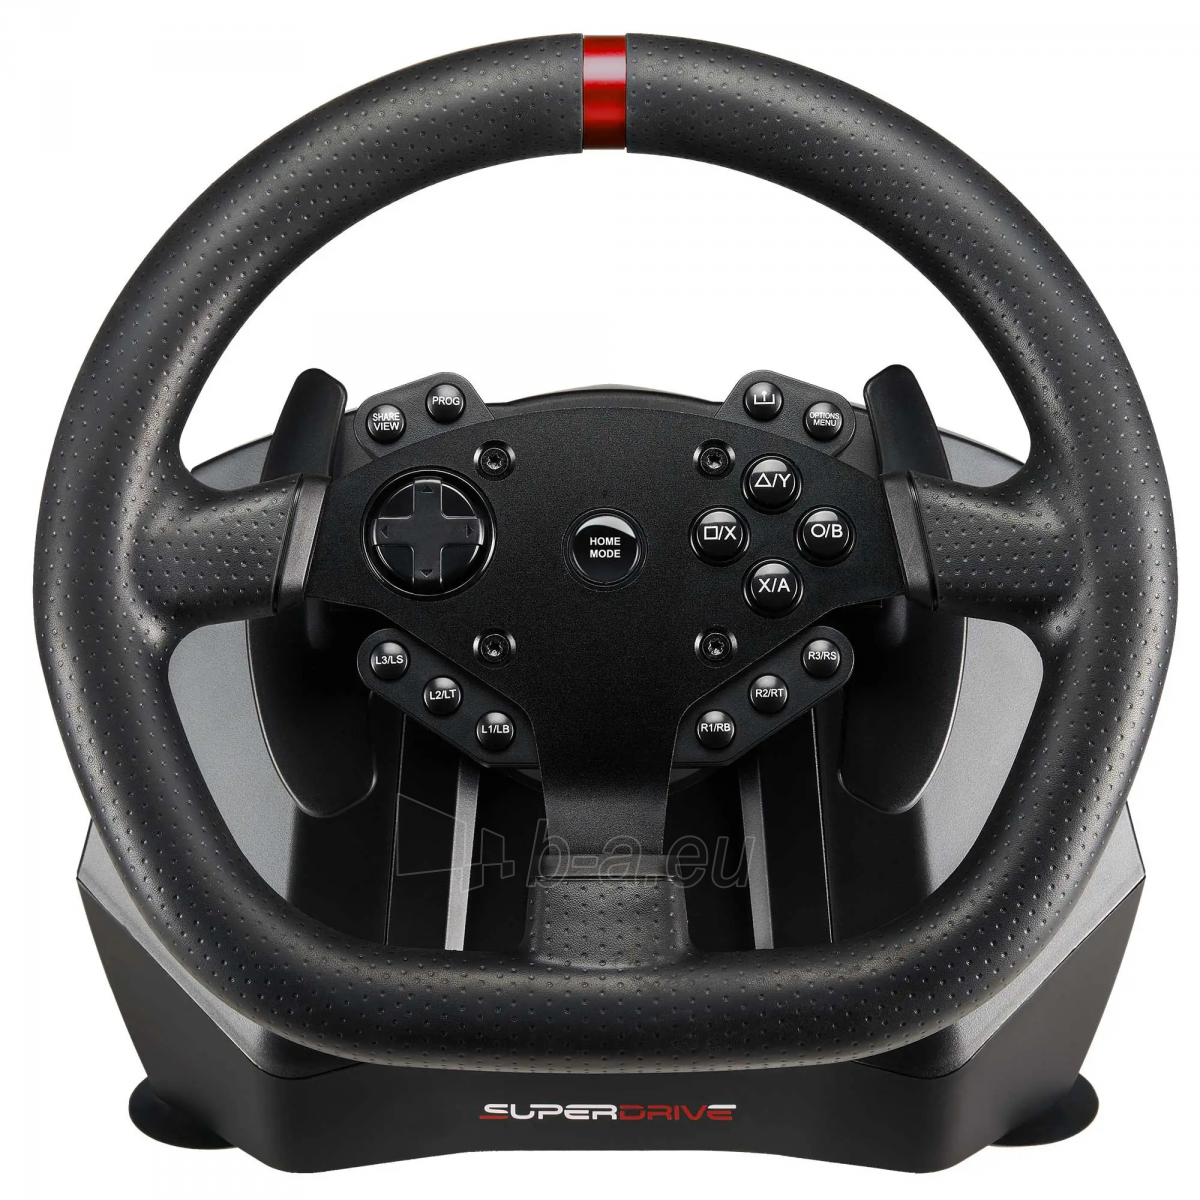 Vairalazdė Subsonic Superdrive GS 950-X Racing Wheel (PC/PS4/XONE/XSX) paveikslėlis 9 iš 10